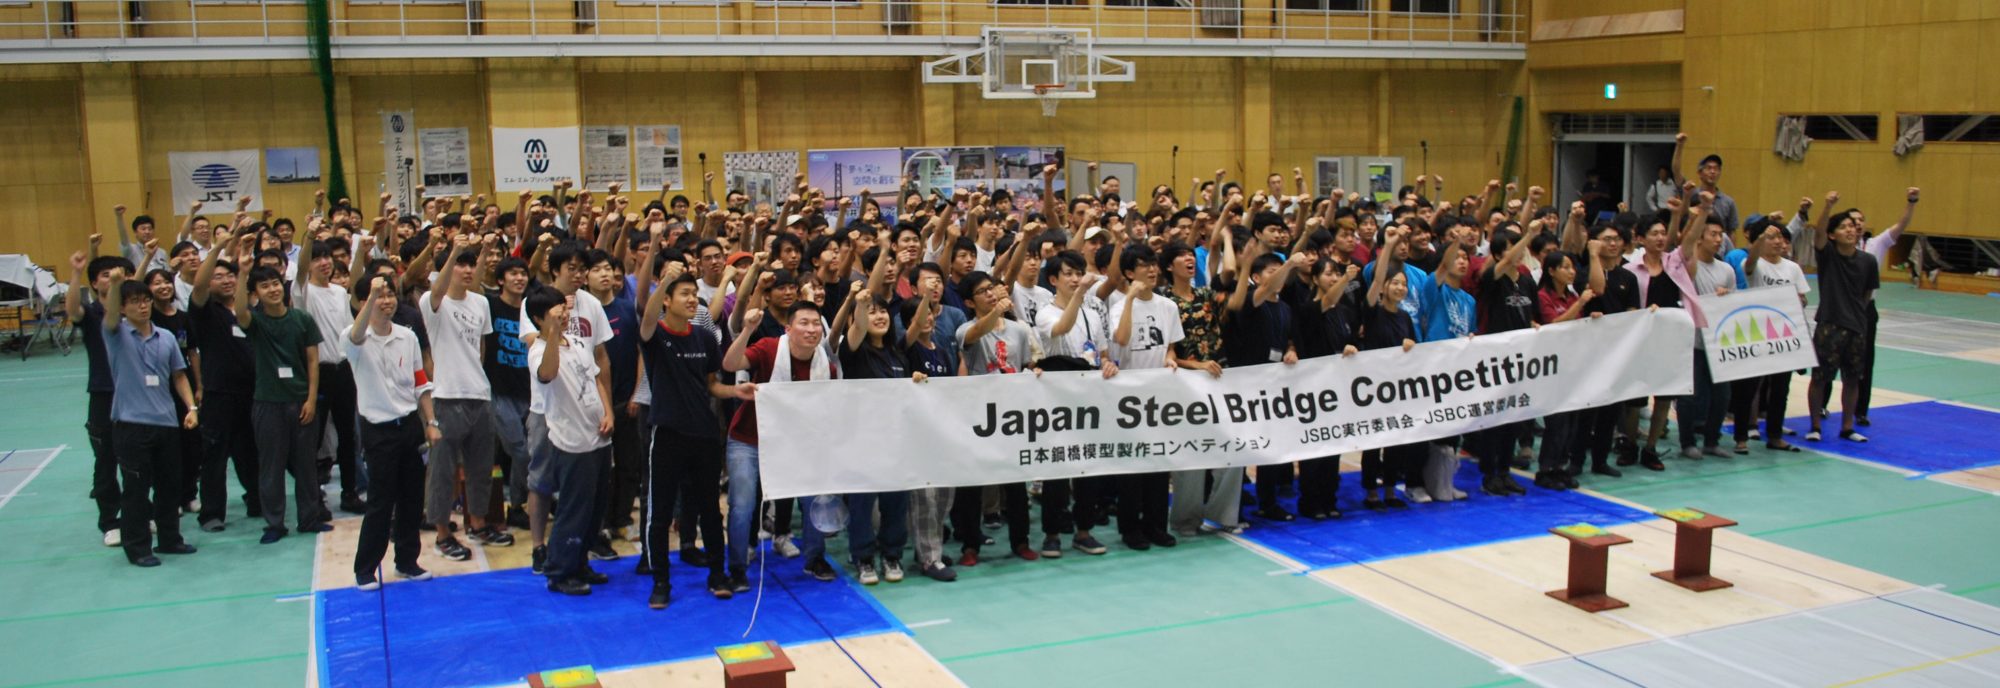 Japan Steel Bridge Competition